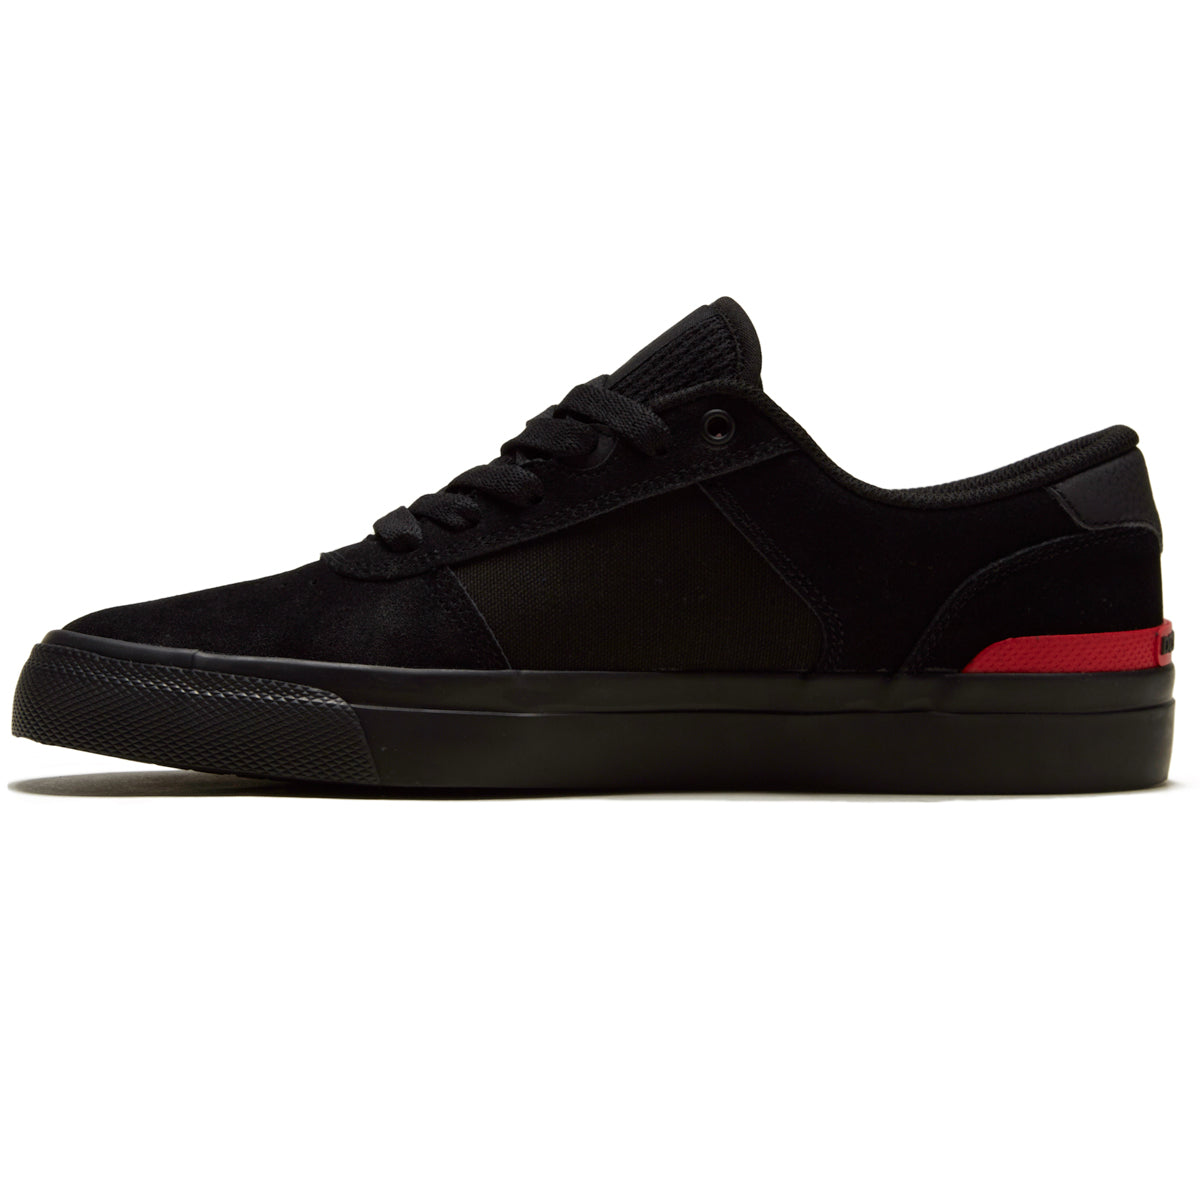 DC Teknic S Shoes - Black/Black/Red image 2